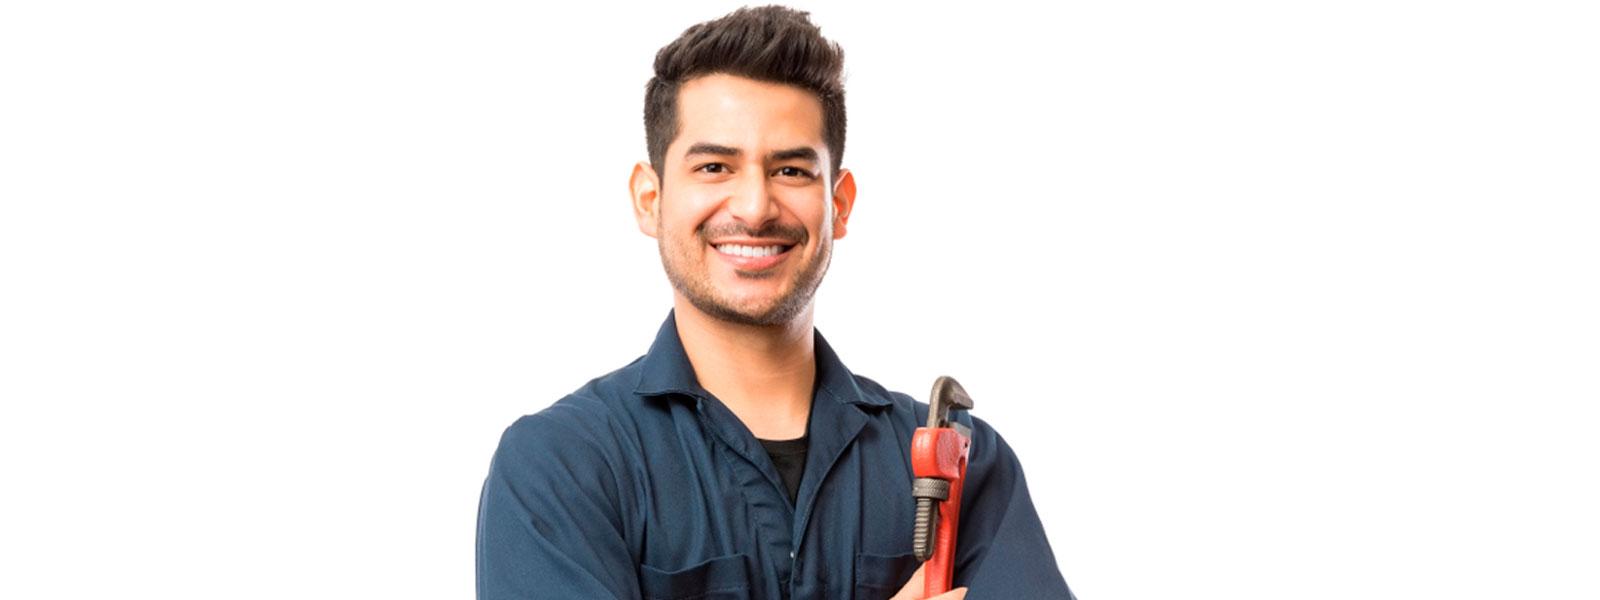 self-employed plumber